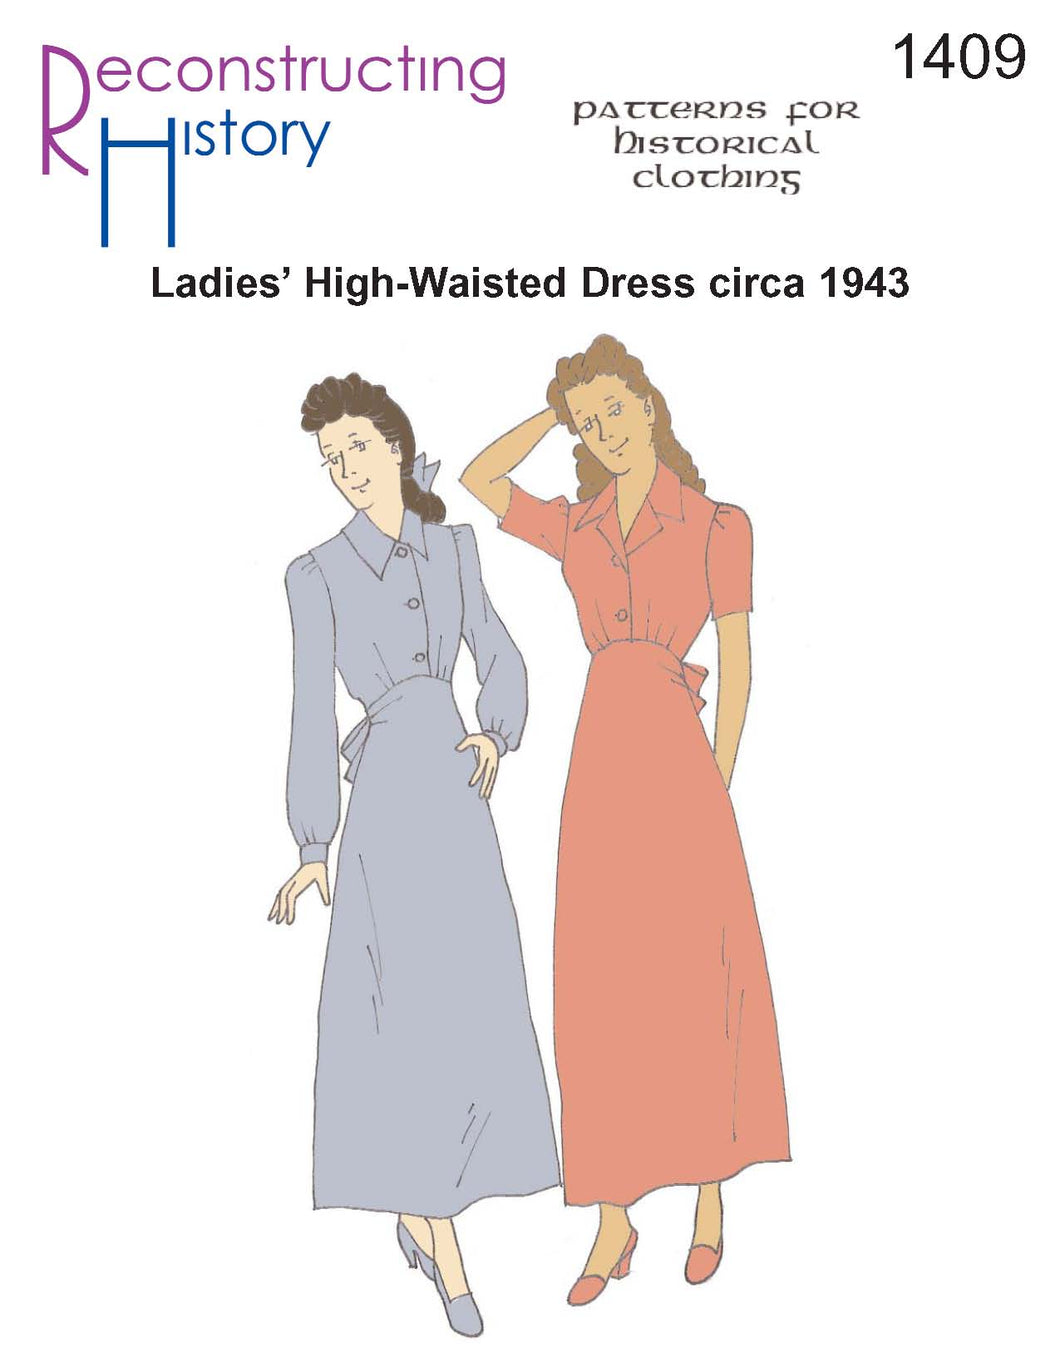 RH1409 — 1943 Ladies' High-Waisted Dress sewing pattern